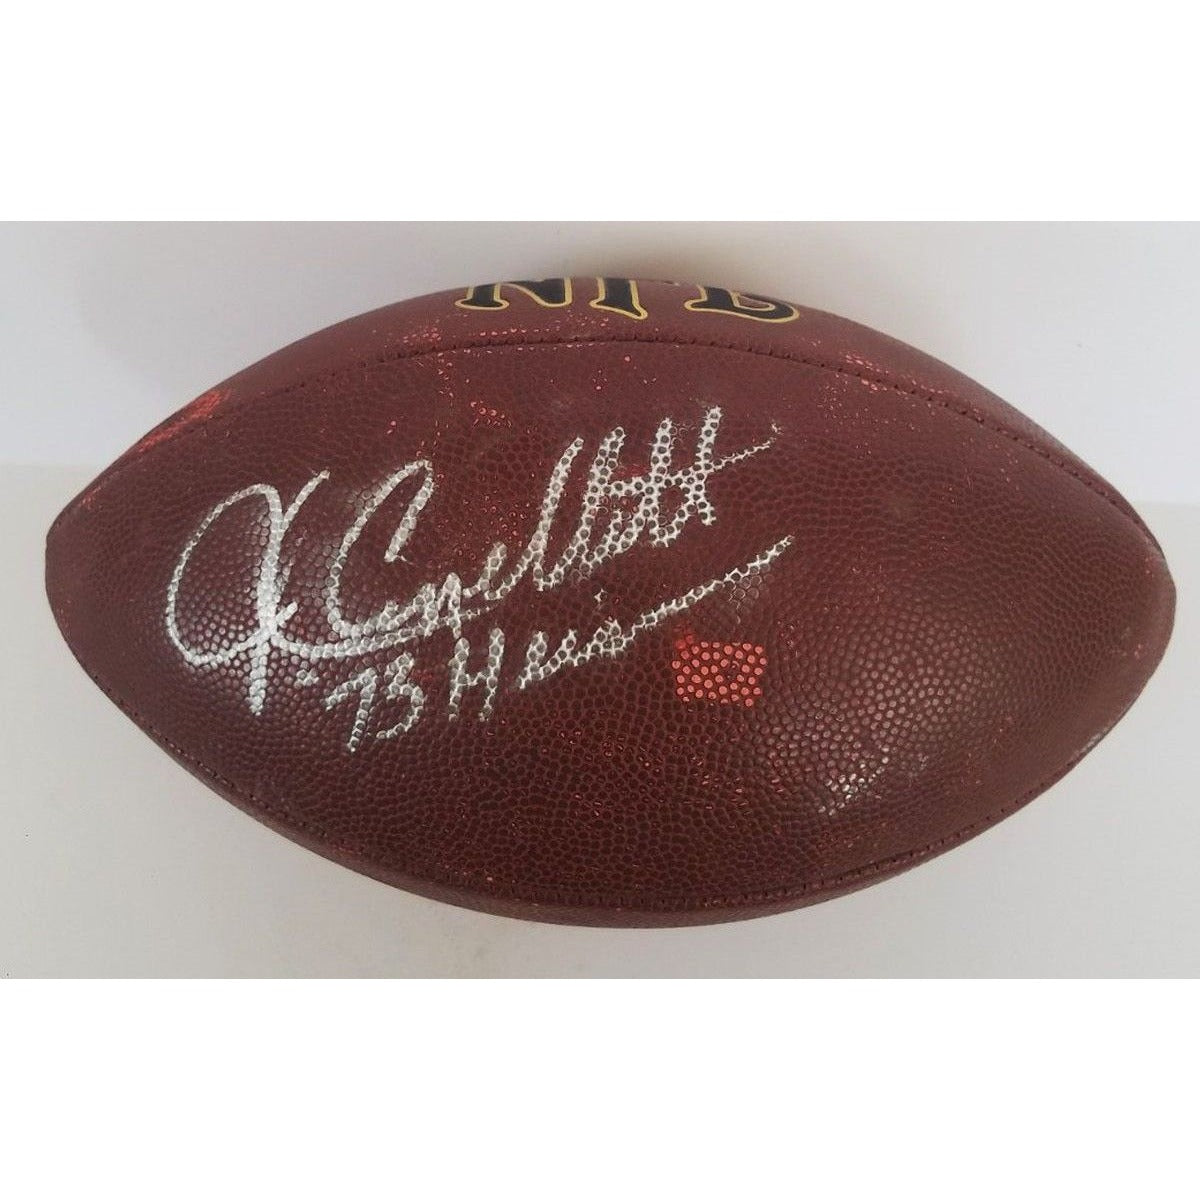 John Cappelletti Penn St 1973 Heisman Trophy winner synthetic leather football signed